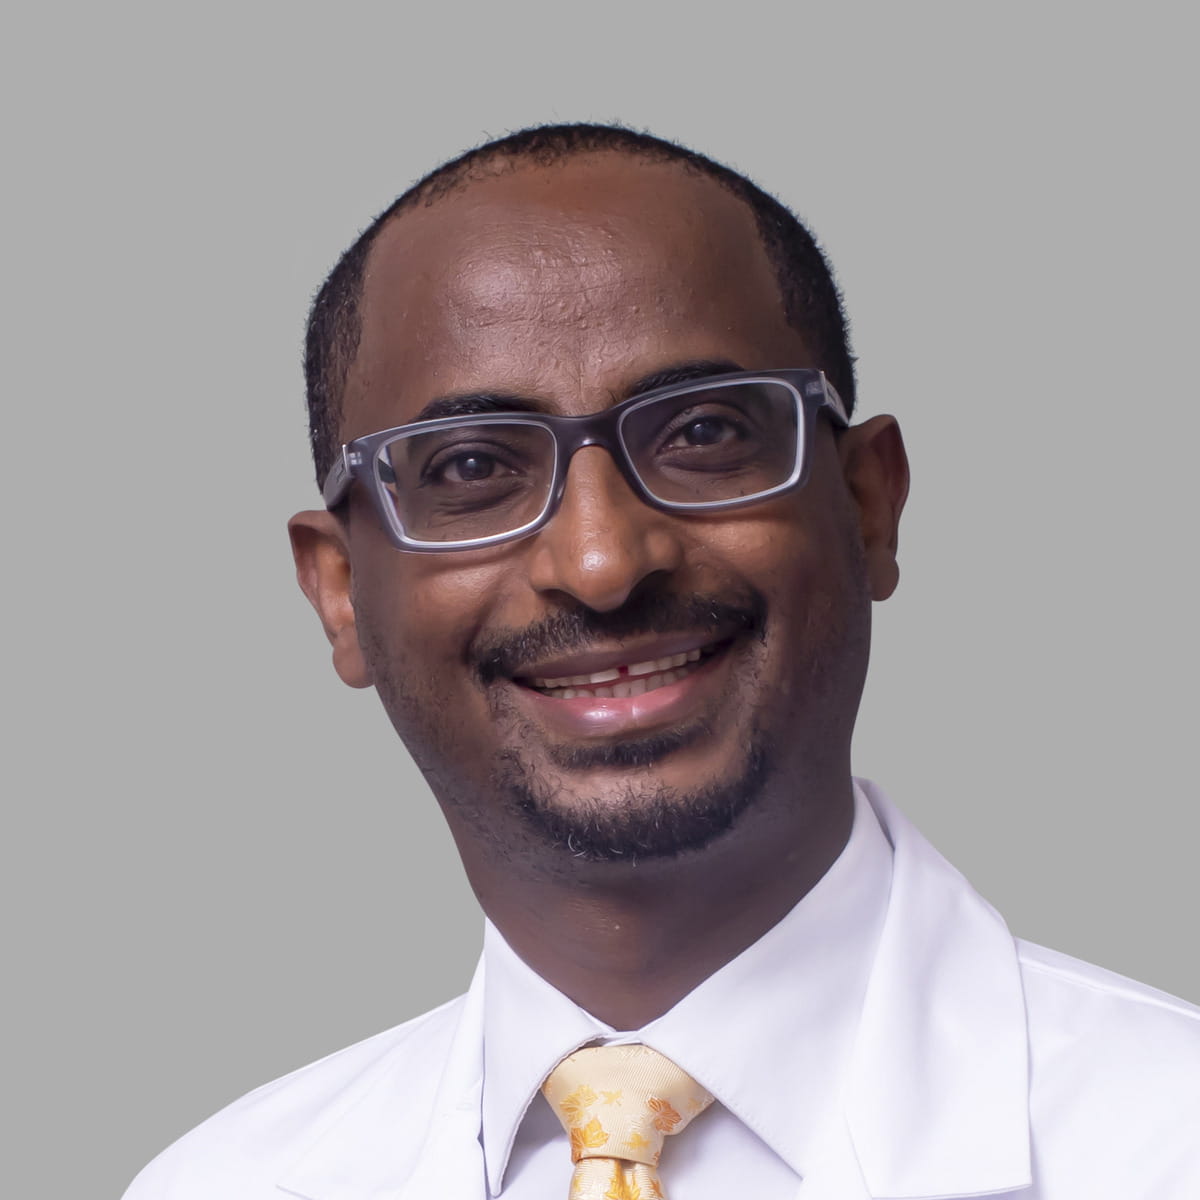 Getnet Tioum, MD - Hospitalist (Medicine)